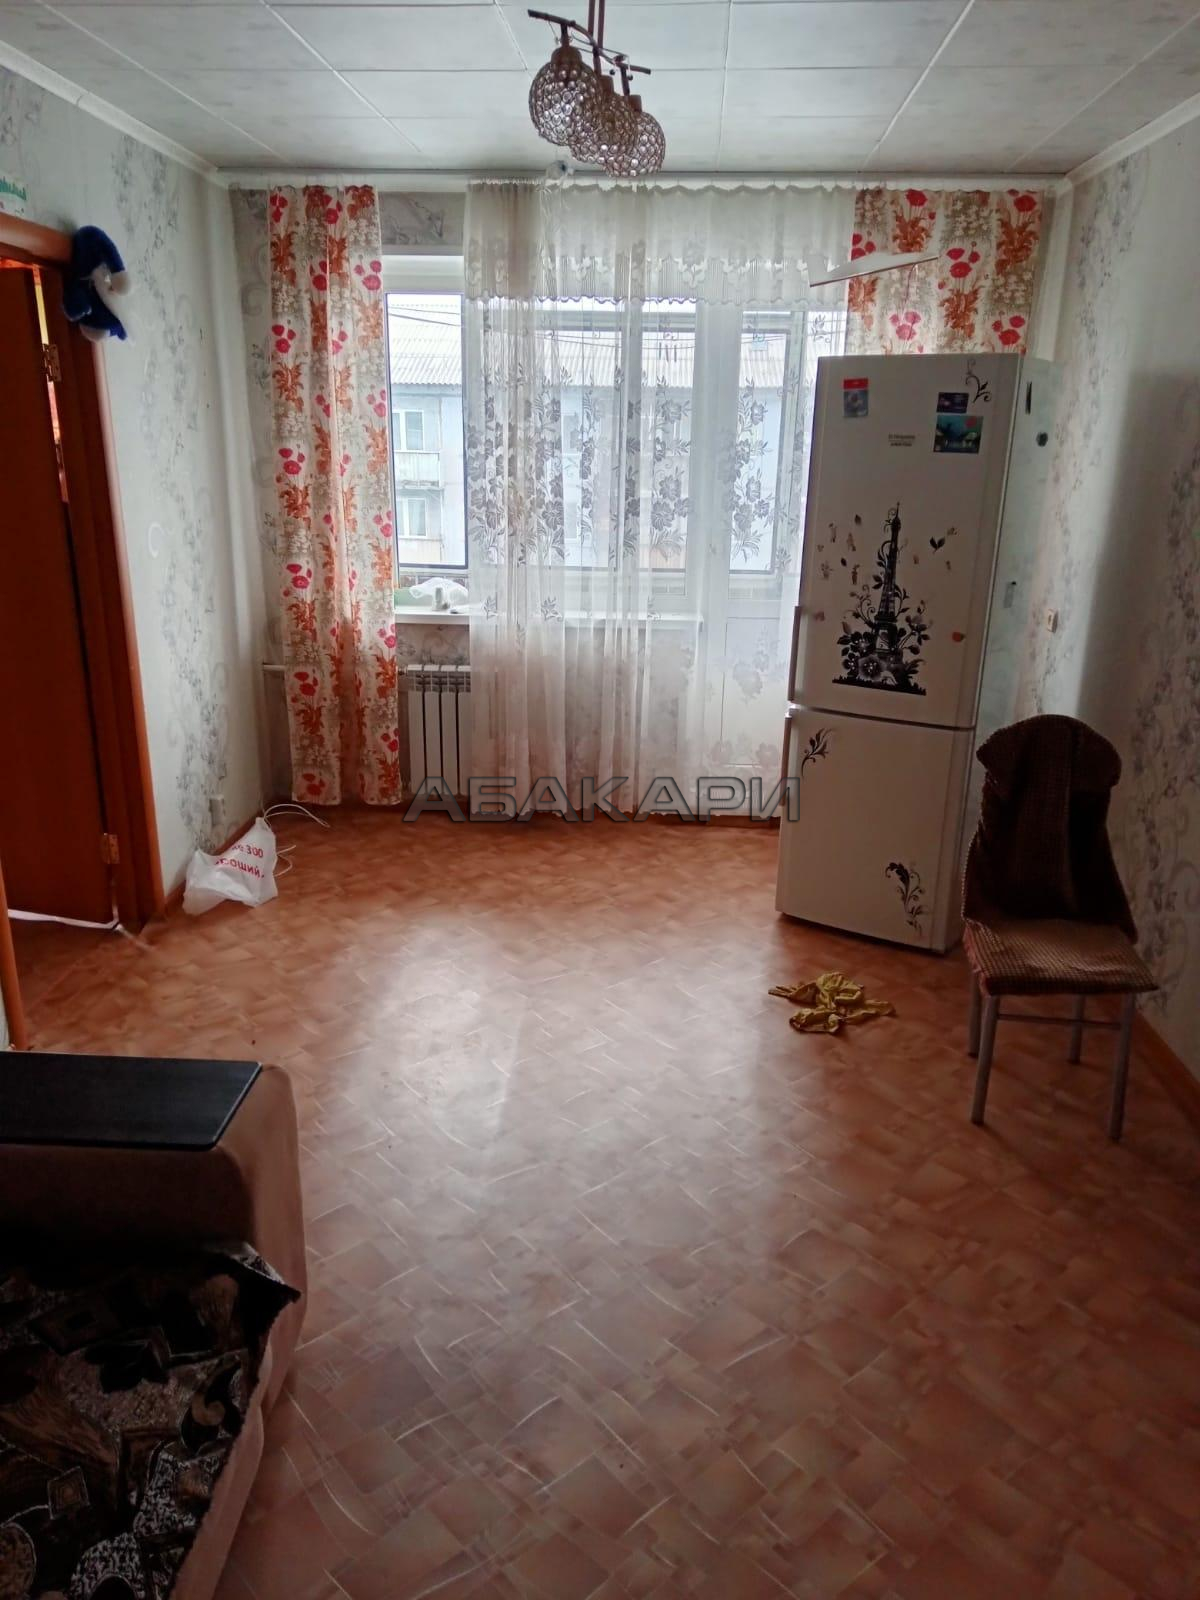 2-комнатная проспект Металлургов, 31  за 25000 руб/мес фото 3